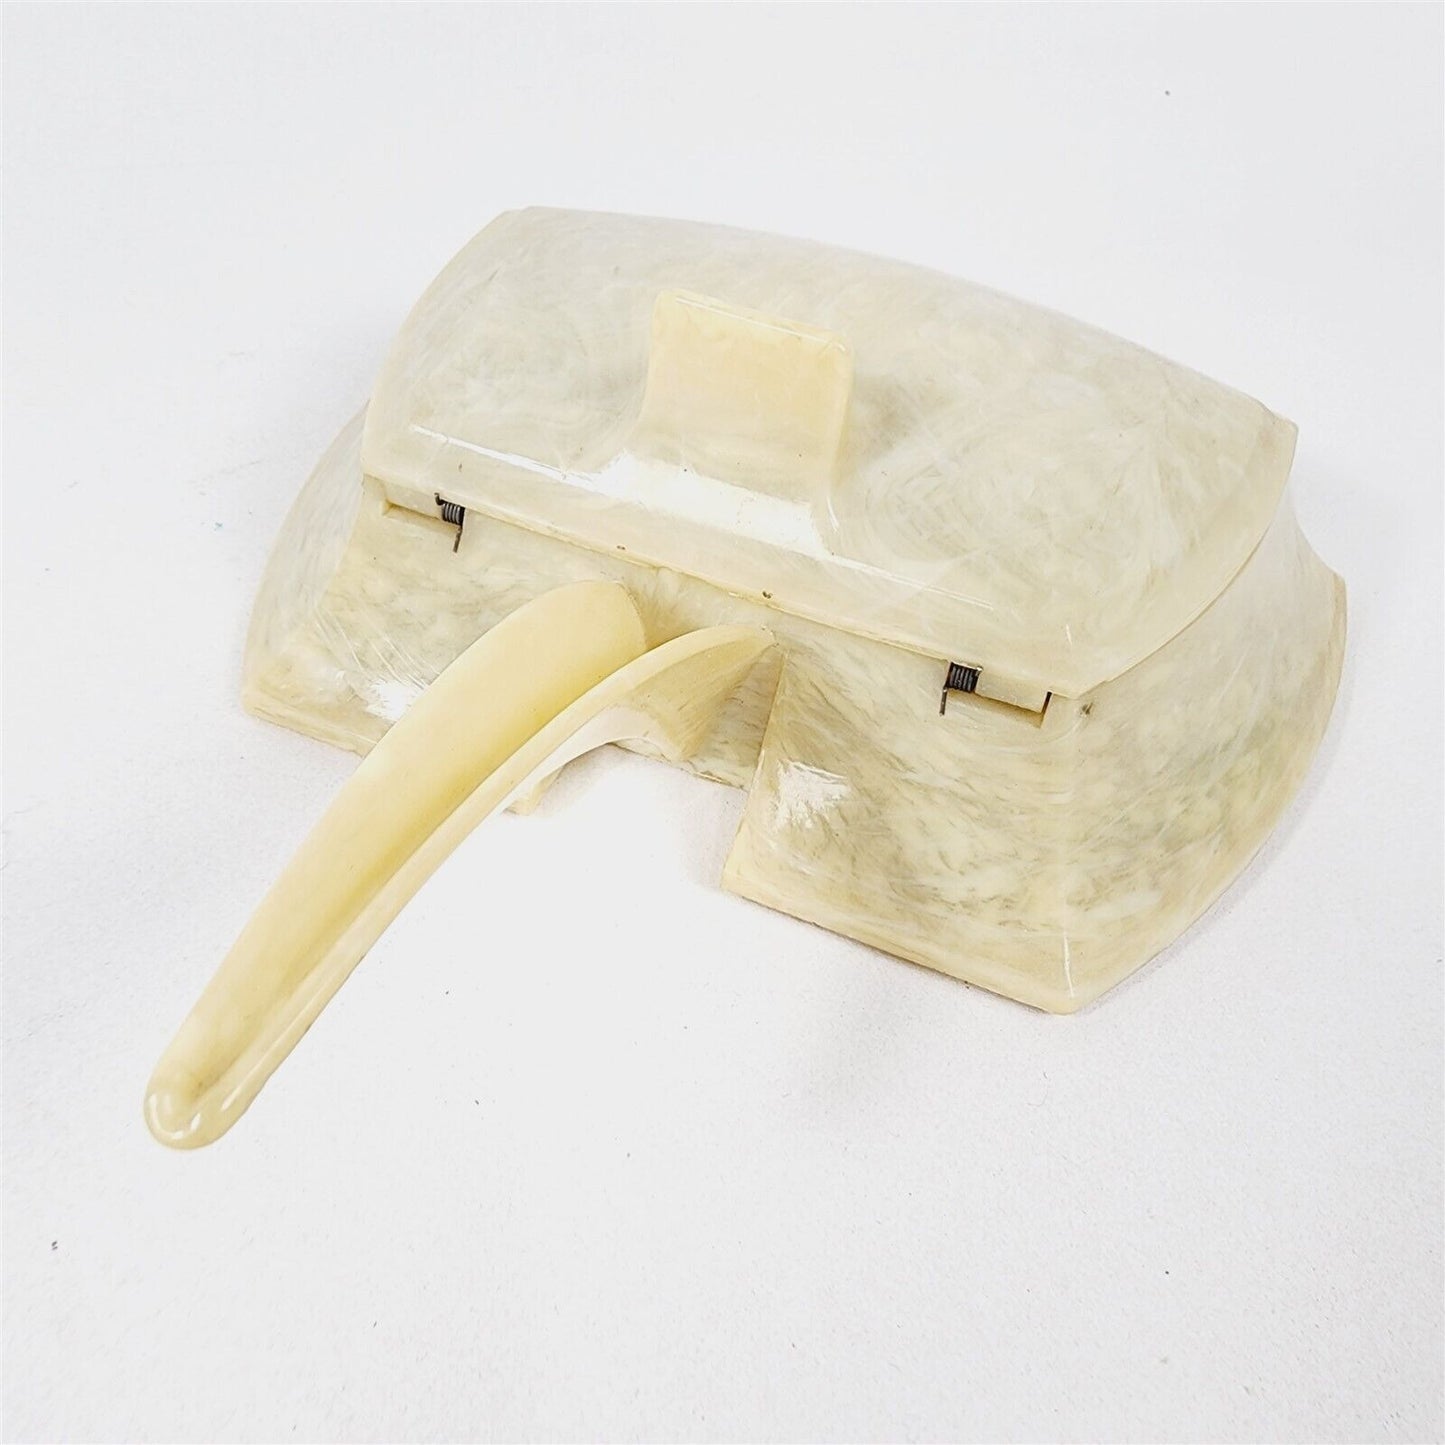 Vintage Celluloid Plastic Silent Butler Crumb Catcher Cream/Ivory